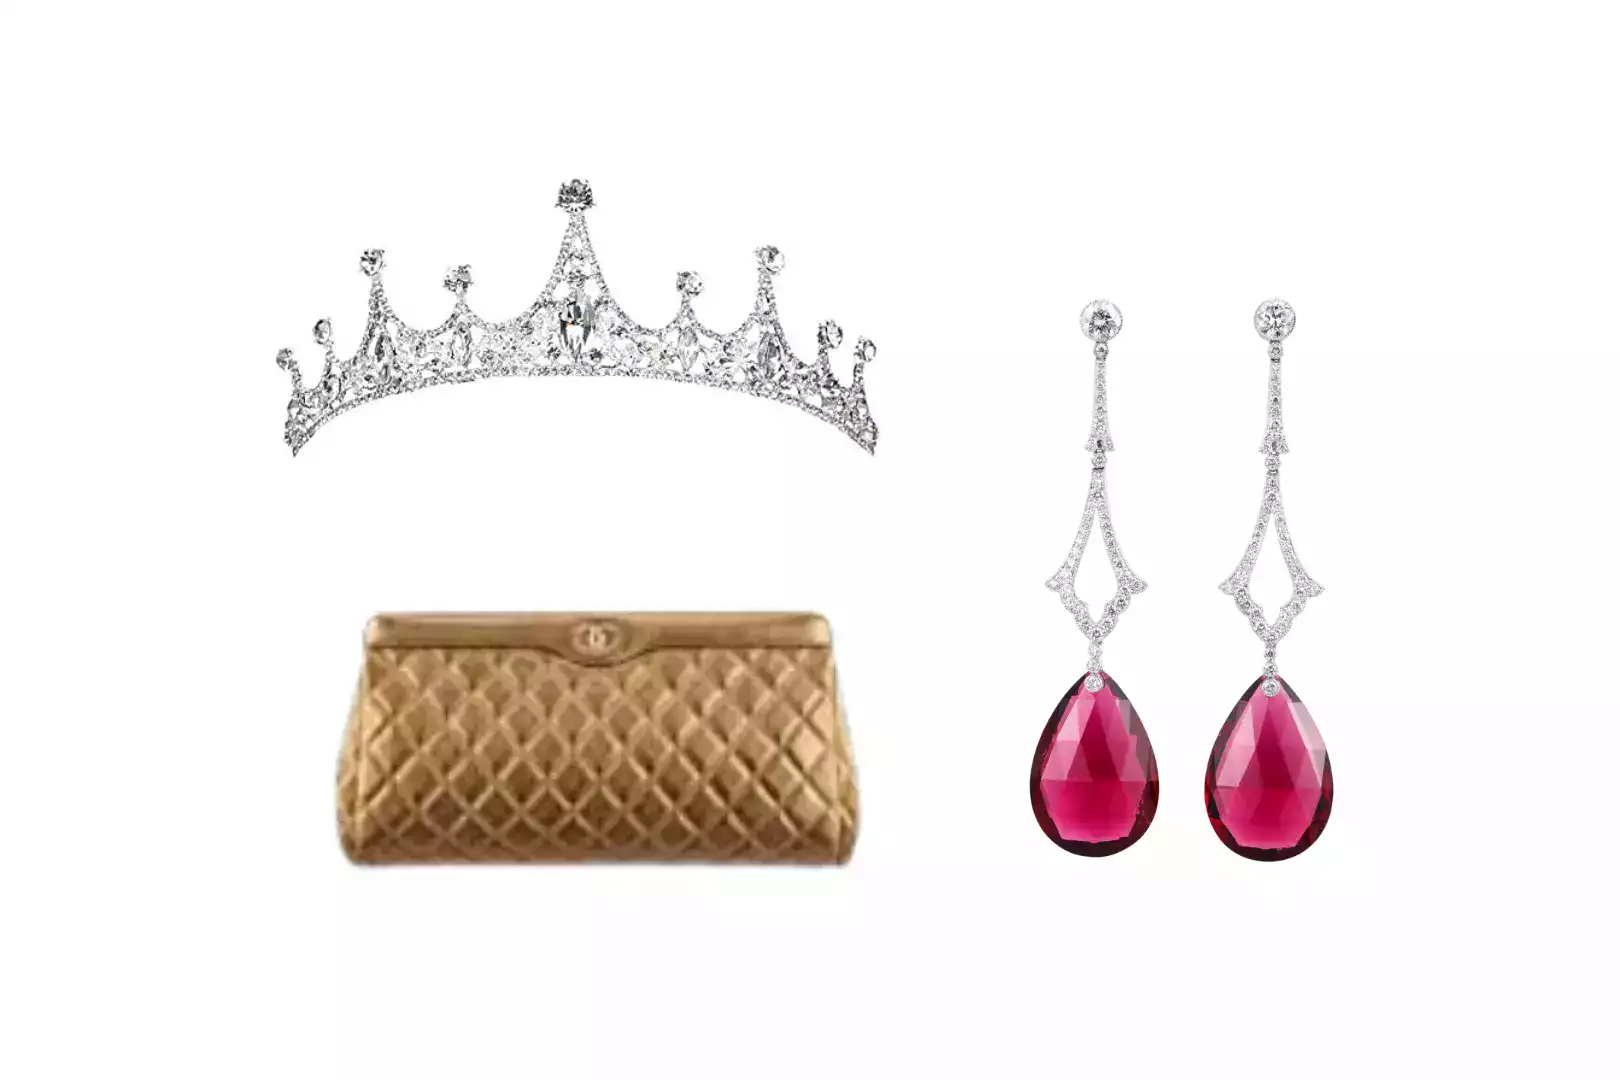 Jewellery and handbags